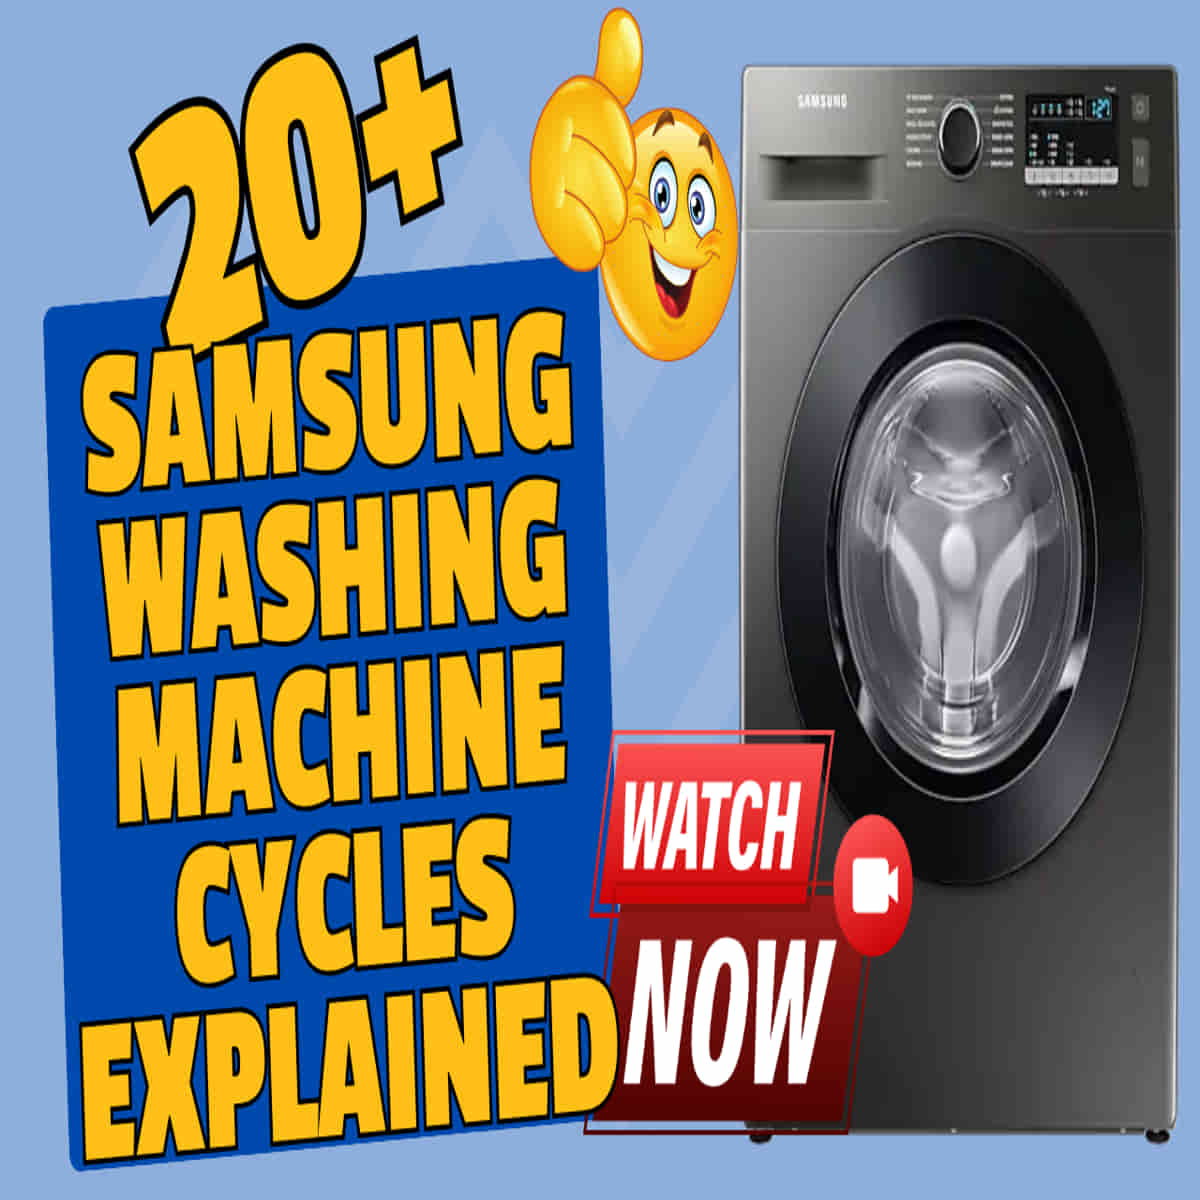 Samsung Washing Machine Cycles Explained